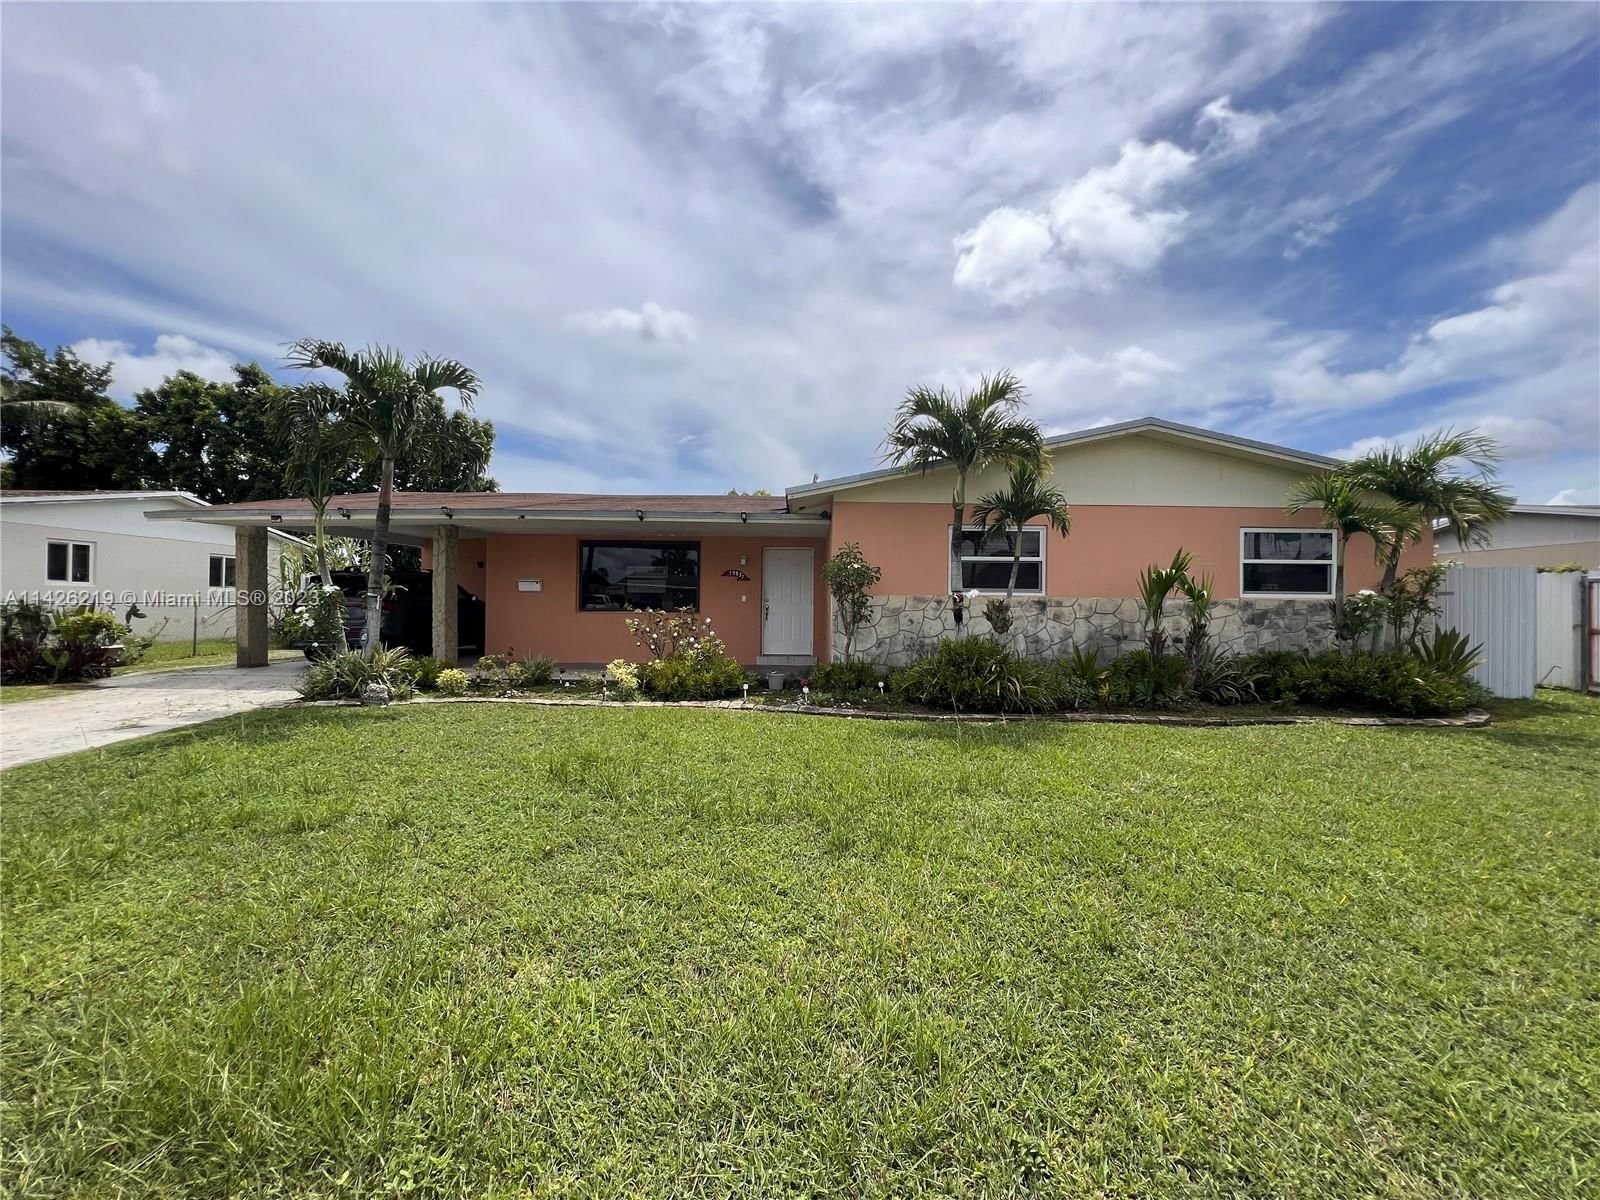 Real estate property located at 19837 118th Pl, Miami-Dade County, Miami, FL